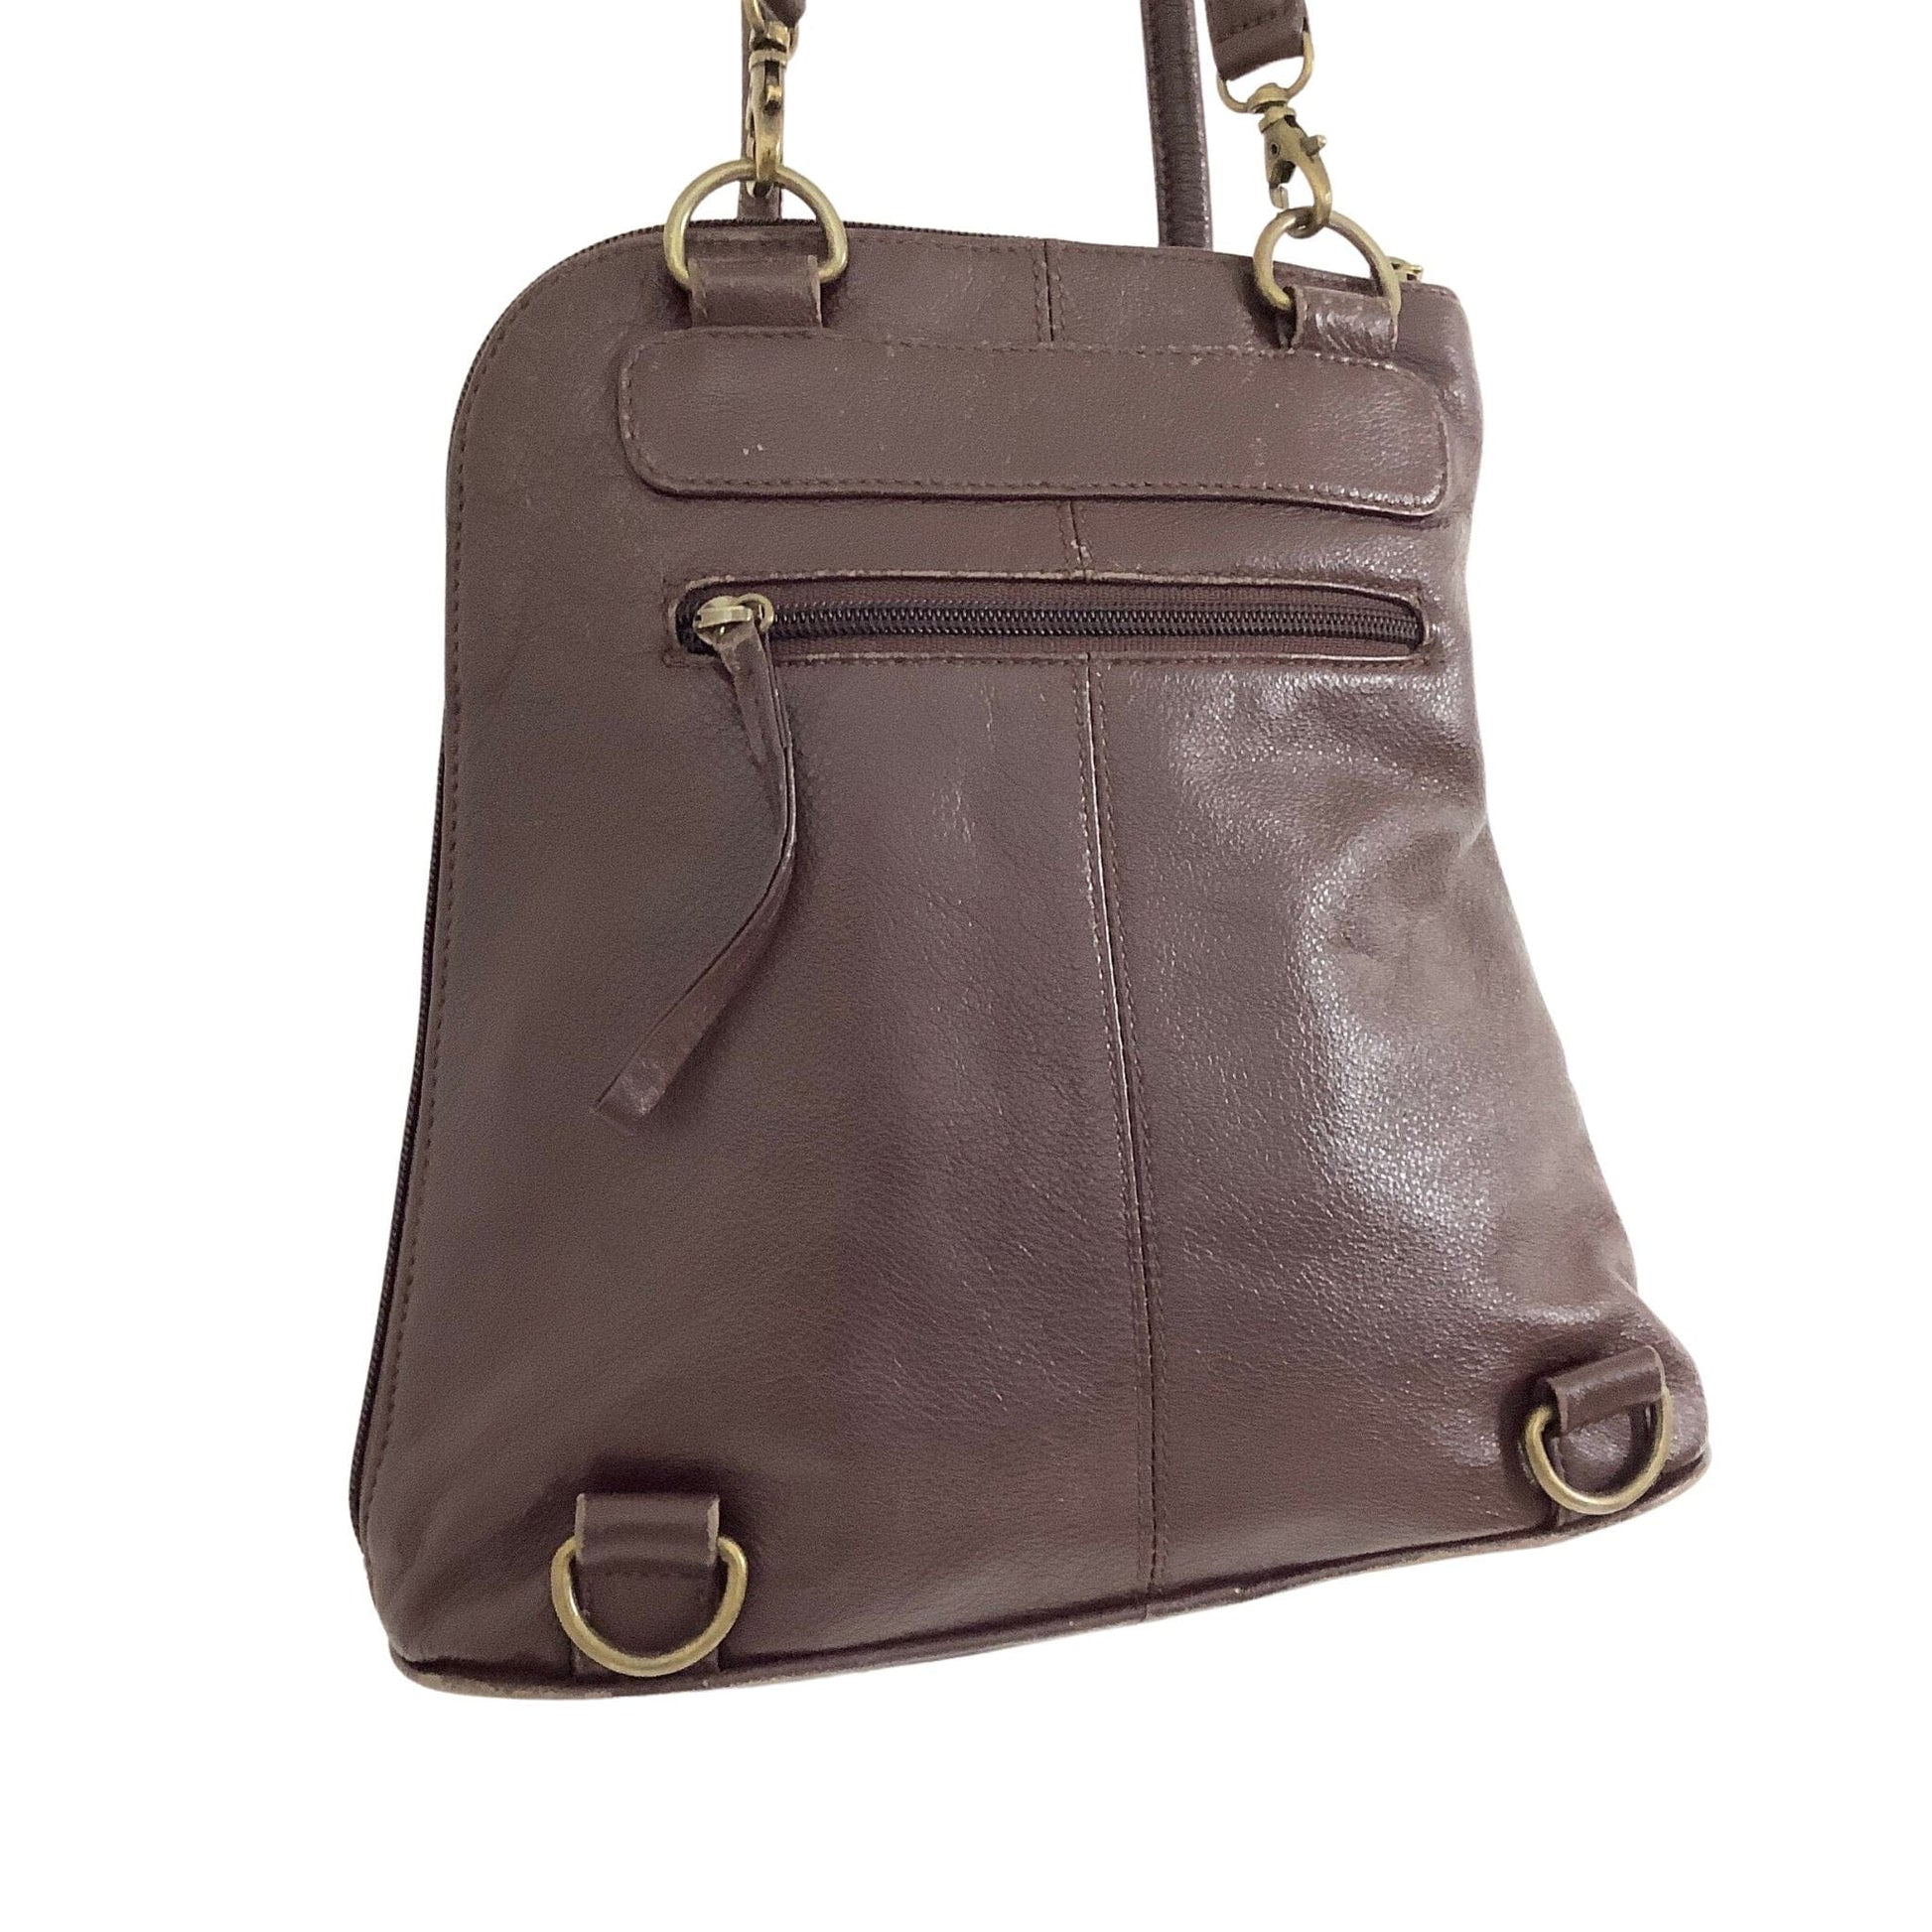 Clarks Black Leather slingback Backpack Handbag Purse Woman's Tote (B7) |  eBay